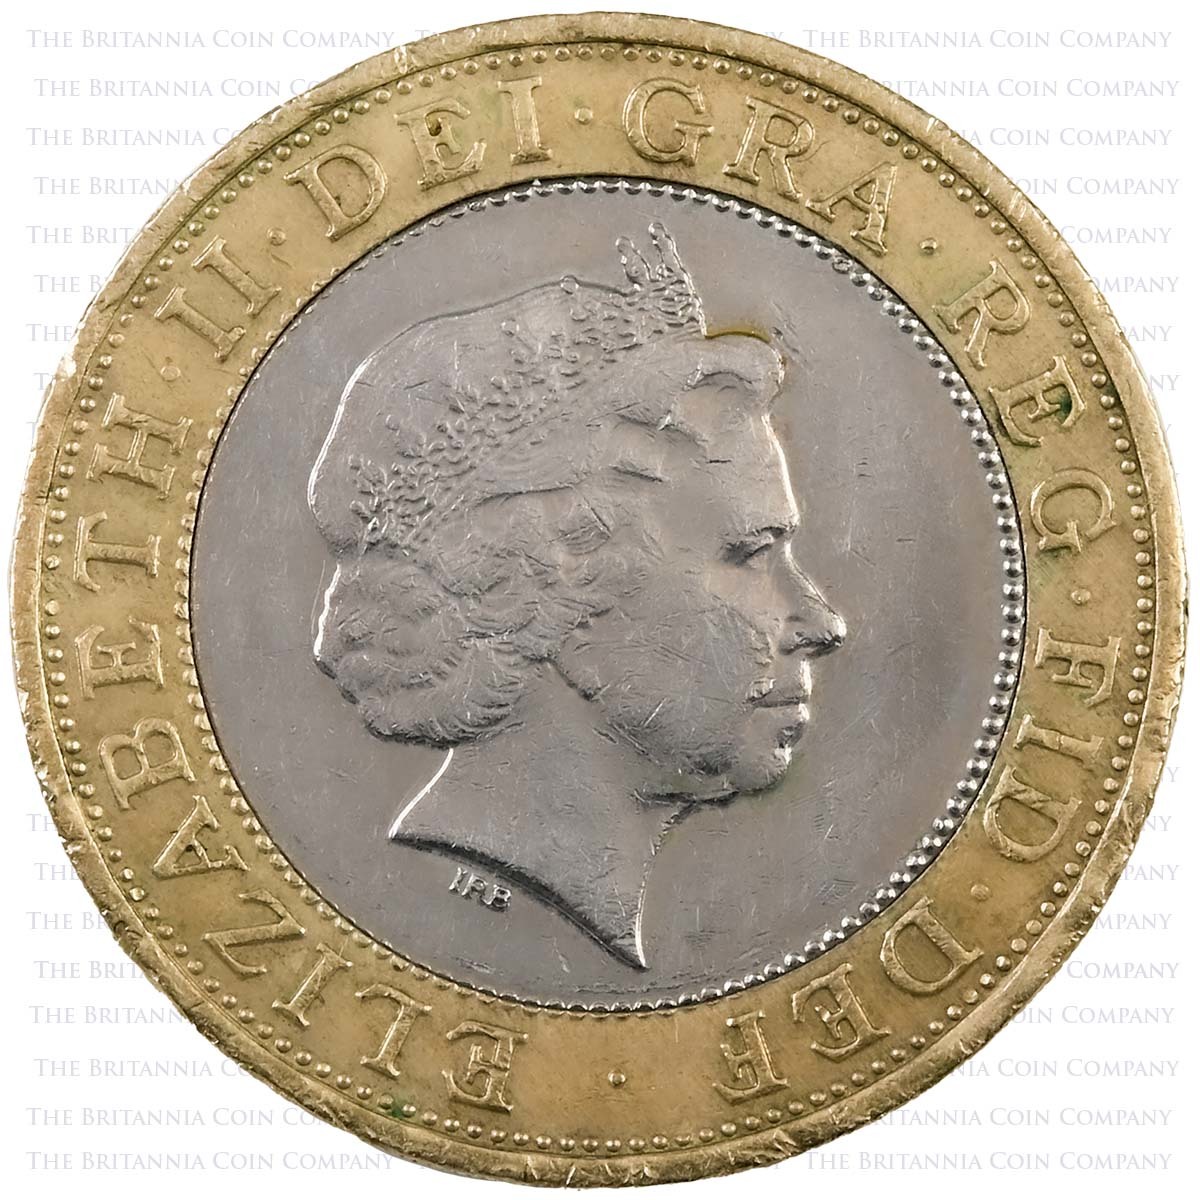 2006 Isambard Kingdom Brunel £2 Coin Paddington Station Obverse